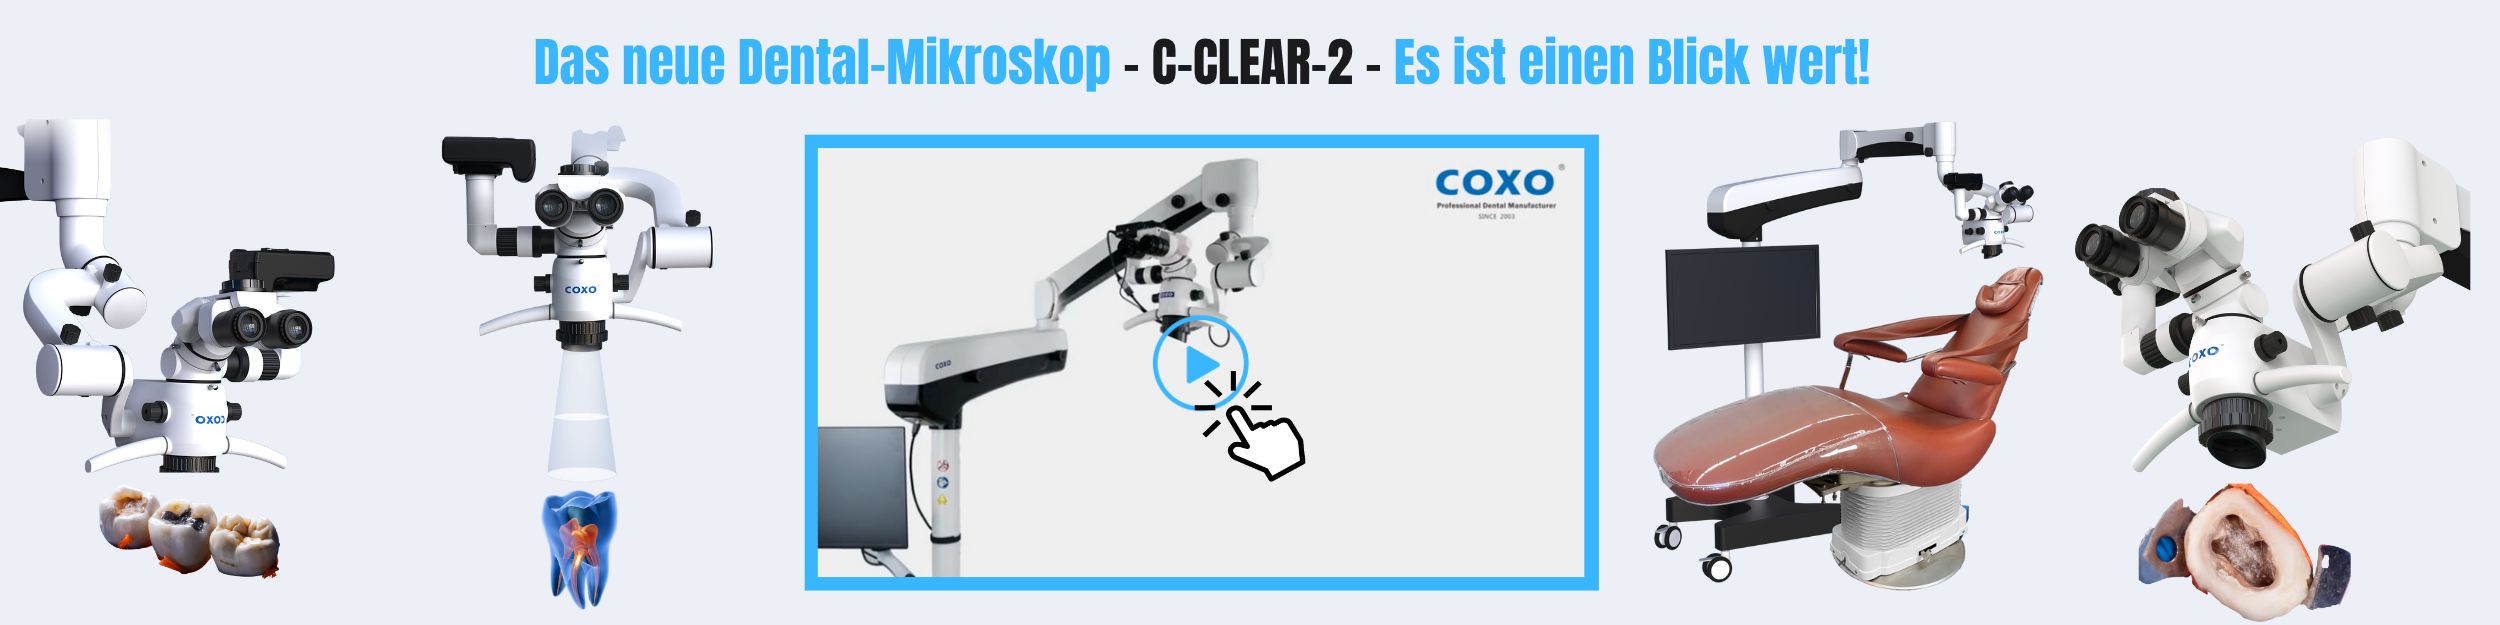 C-Clear Dental Midroskop